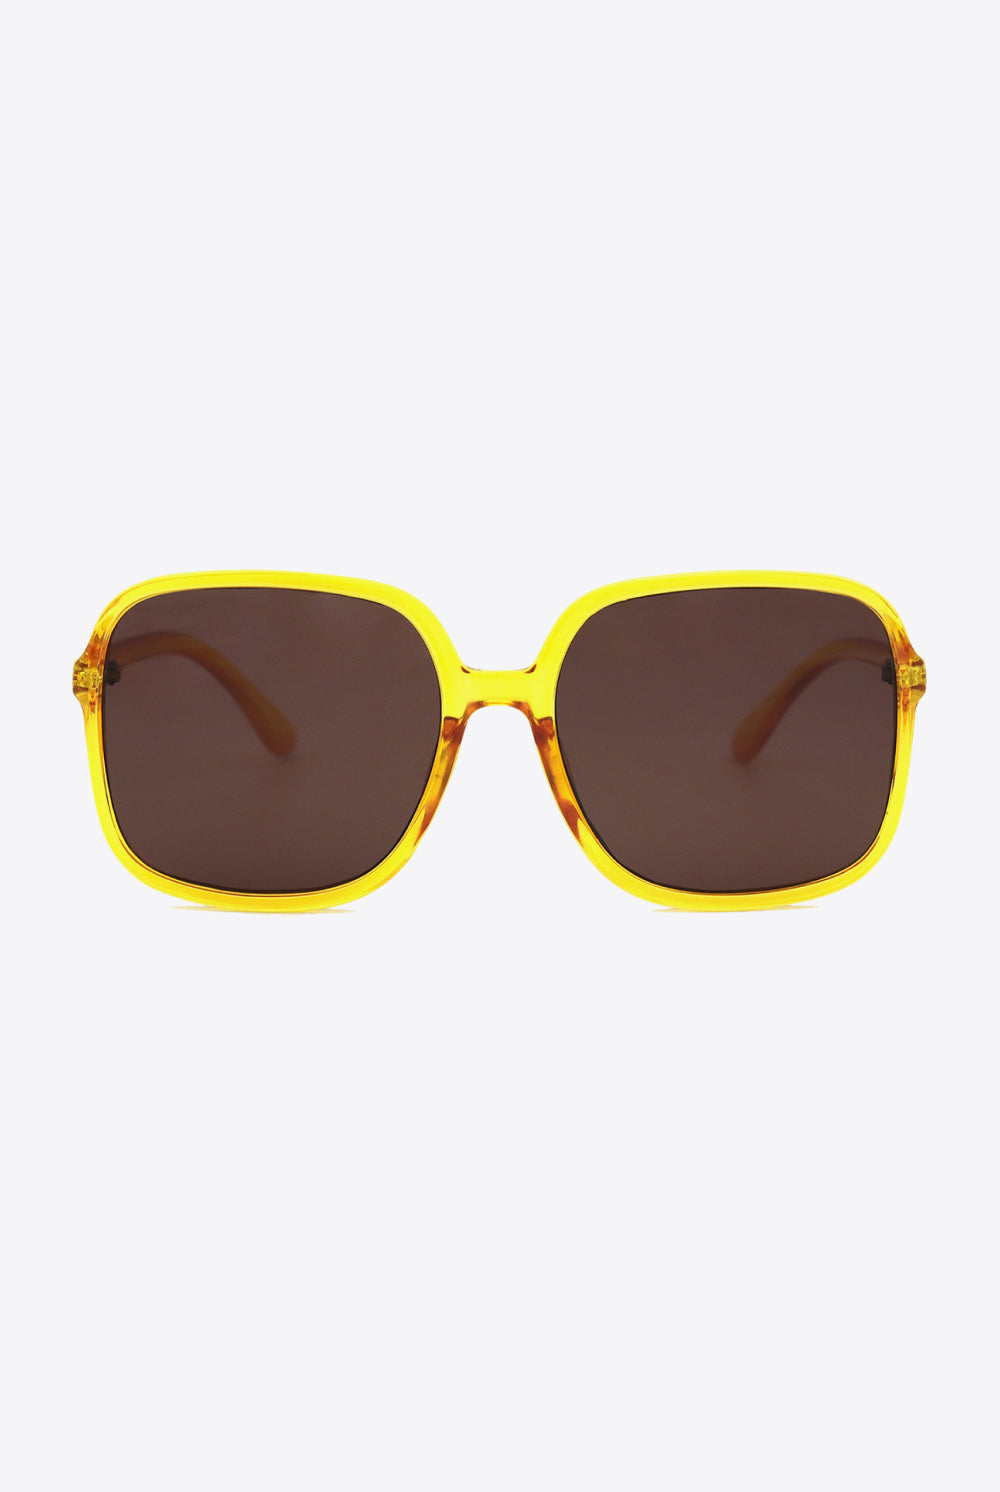 Dark Olive Green Polycarbonate Square Sunglasses Sunglasses